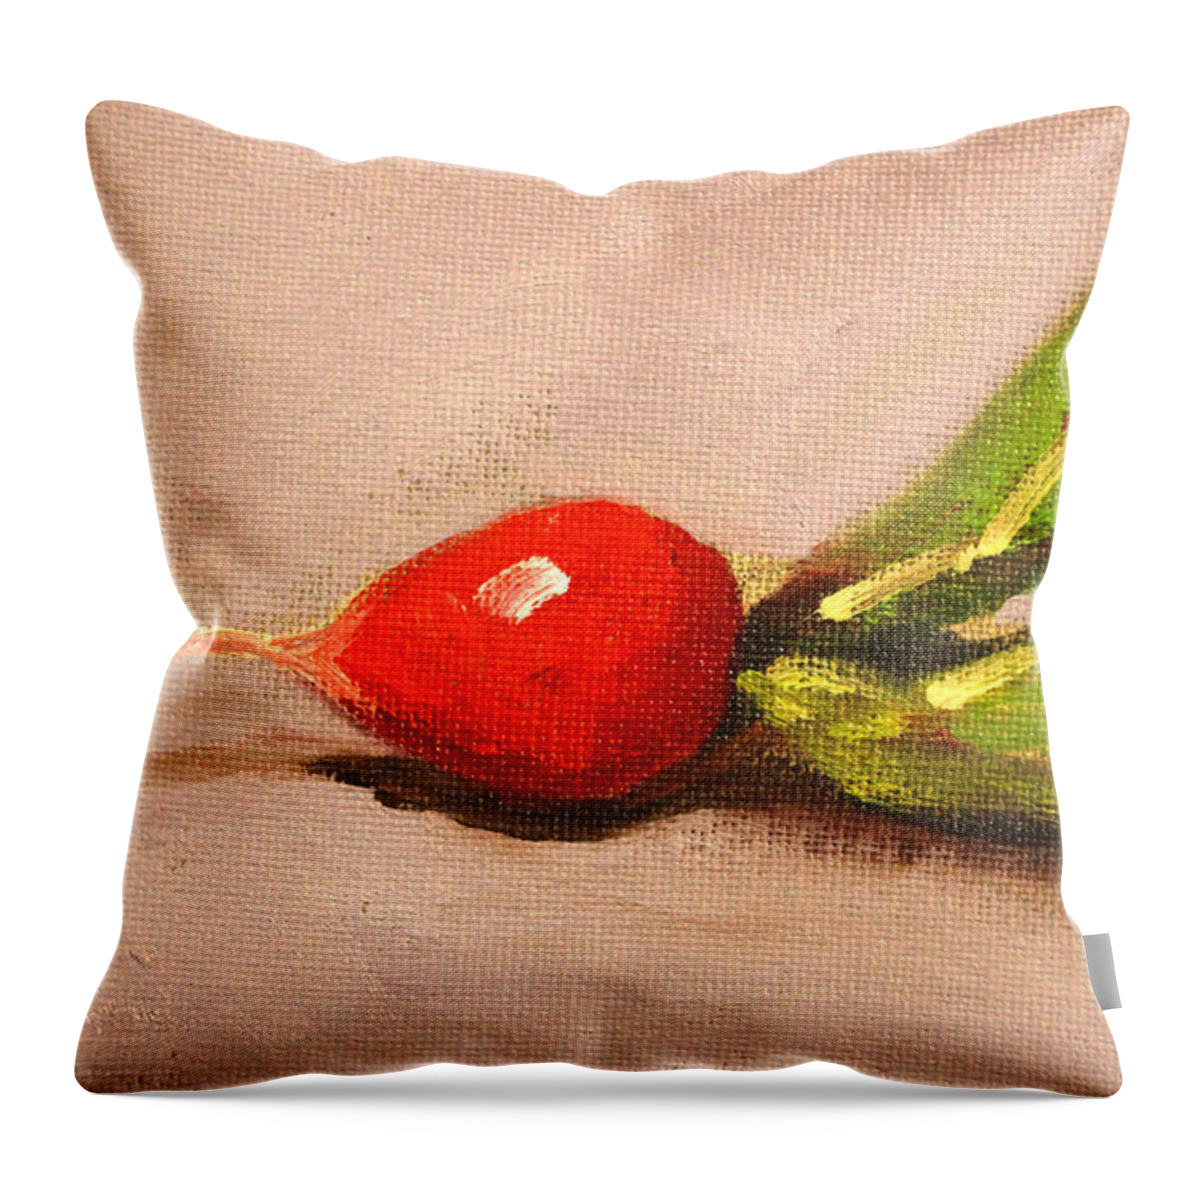 Radish Throw Pillow featuring the painting Radish Resting by Nancy Merkle